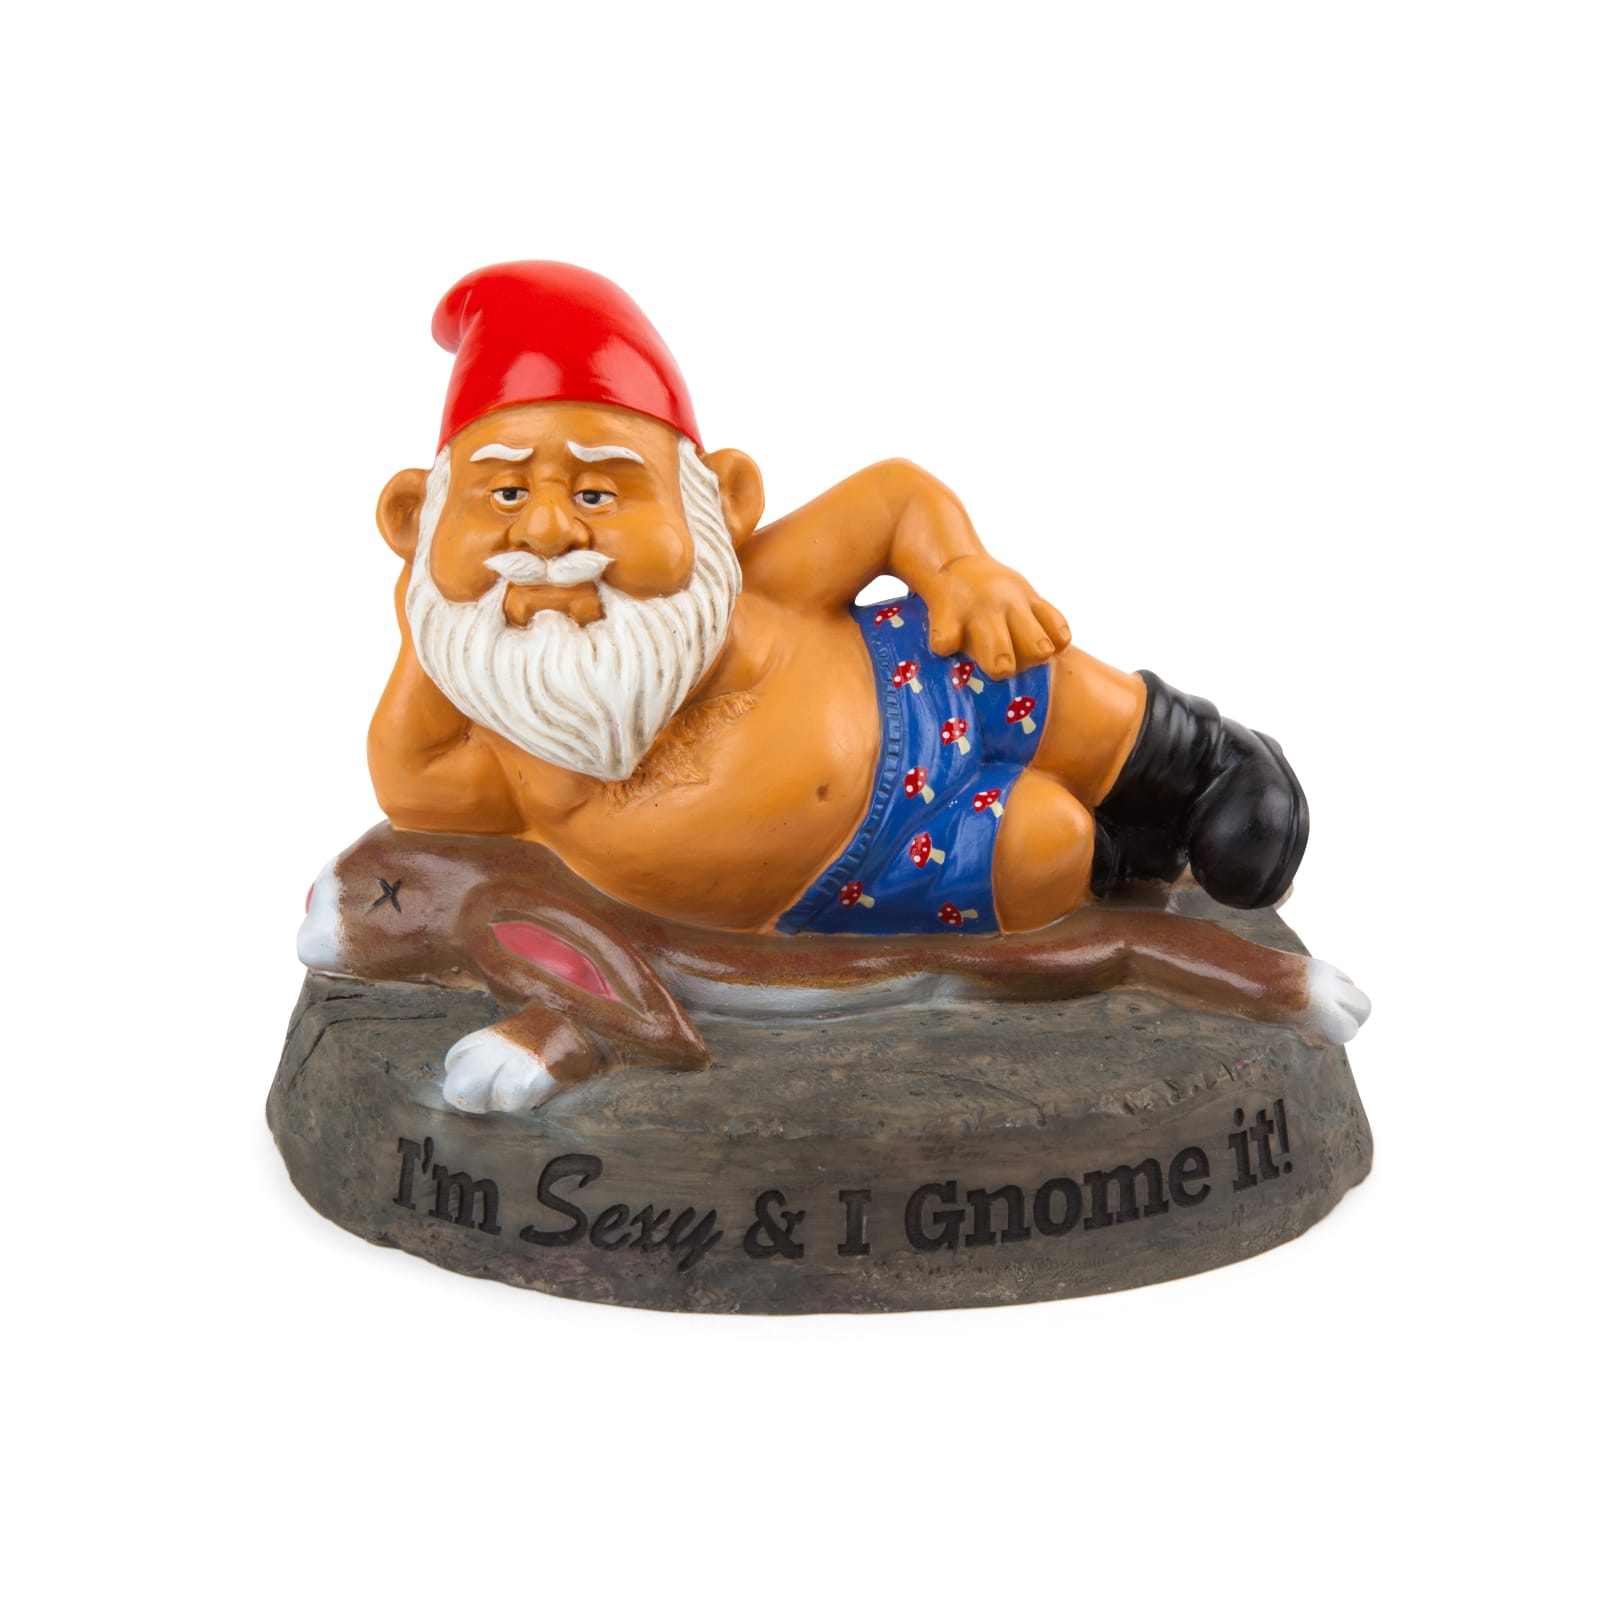 The Sexy and I Gnome It Garden Gnome